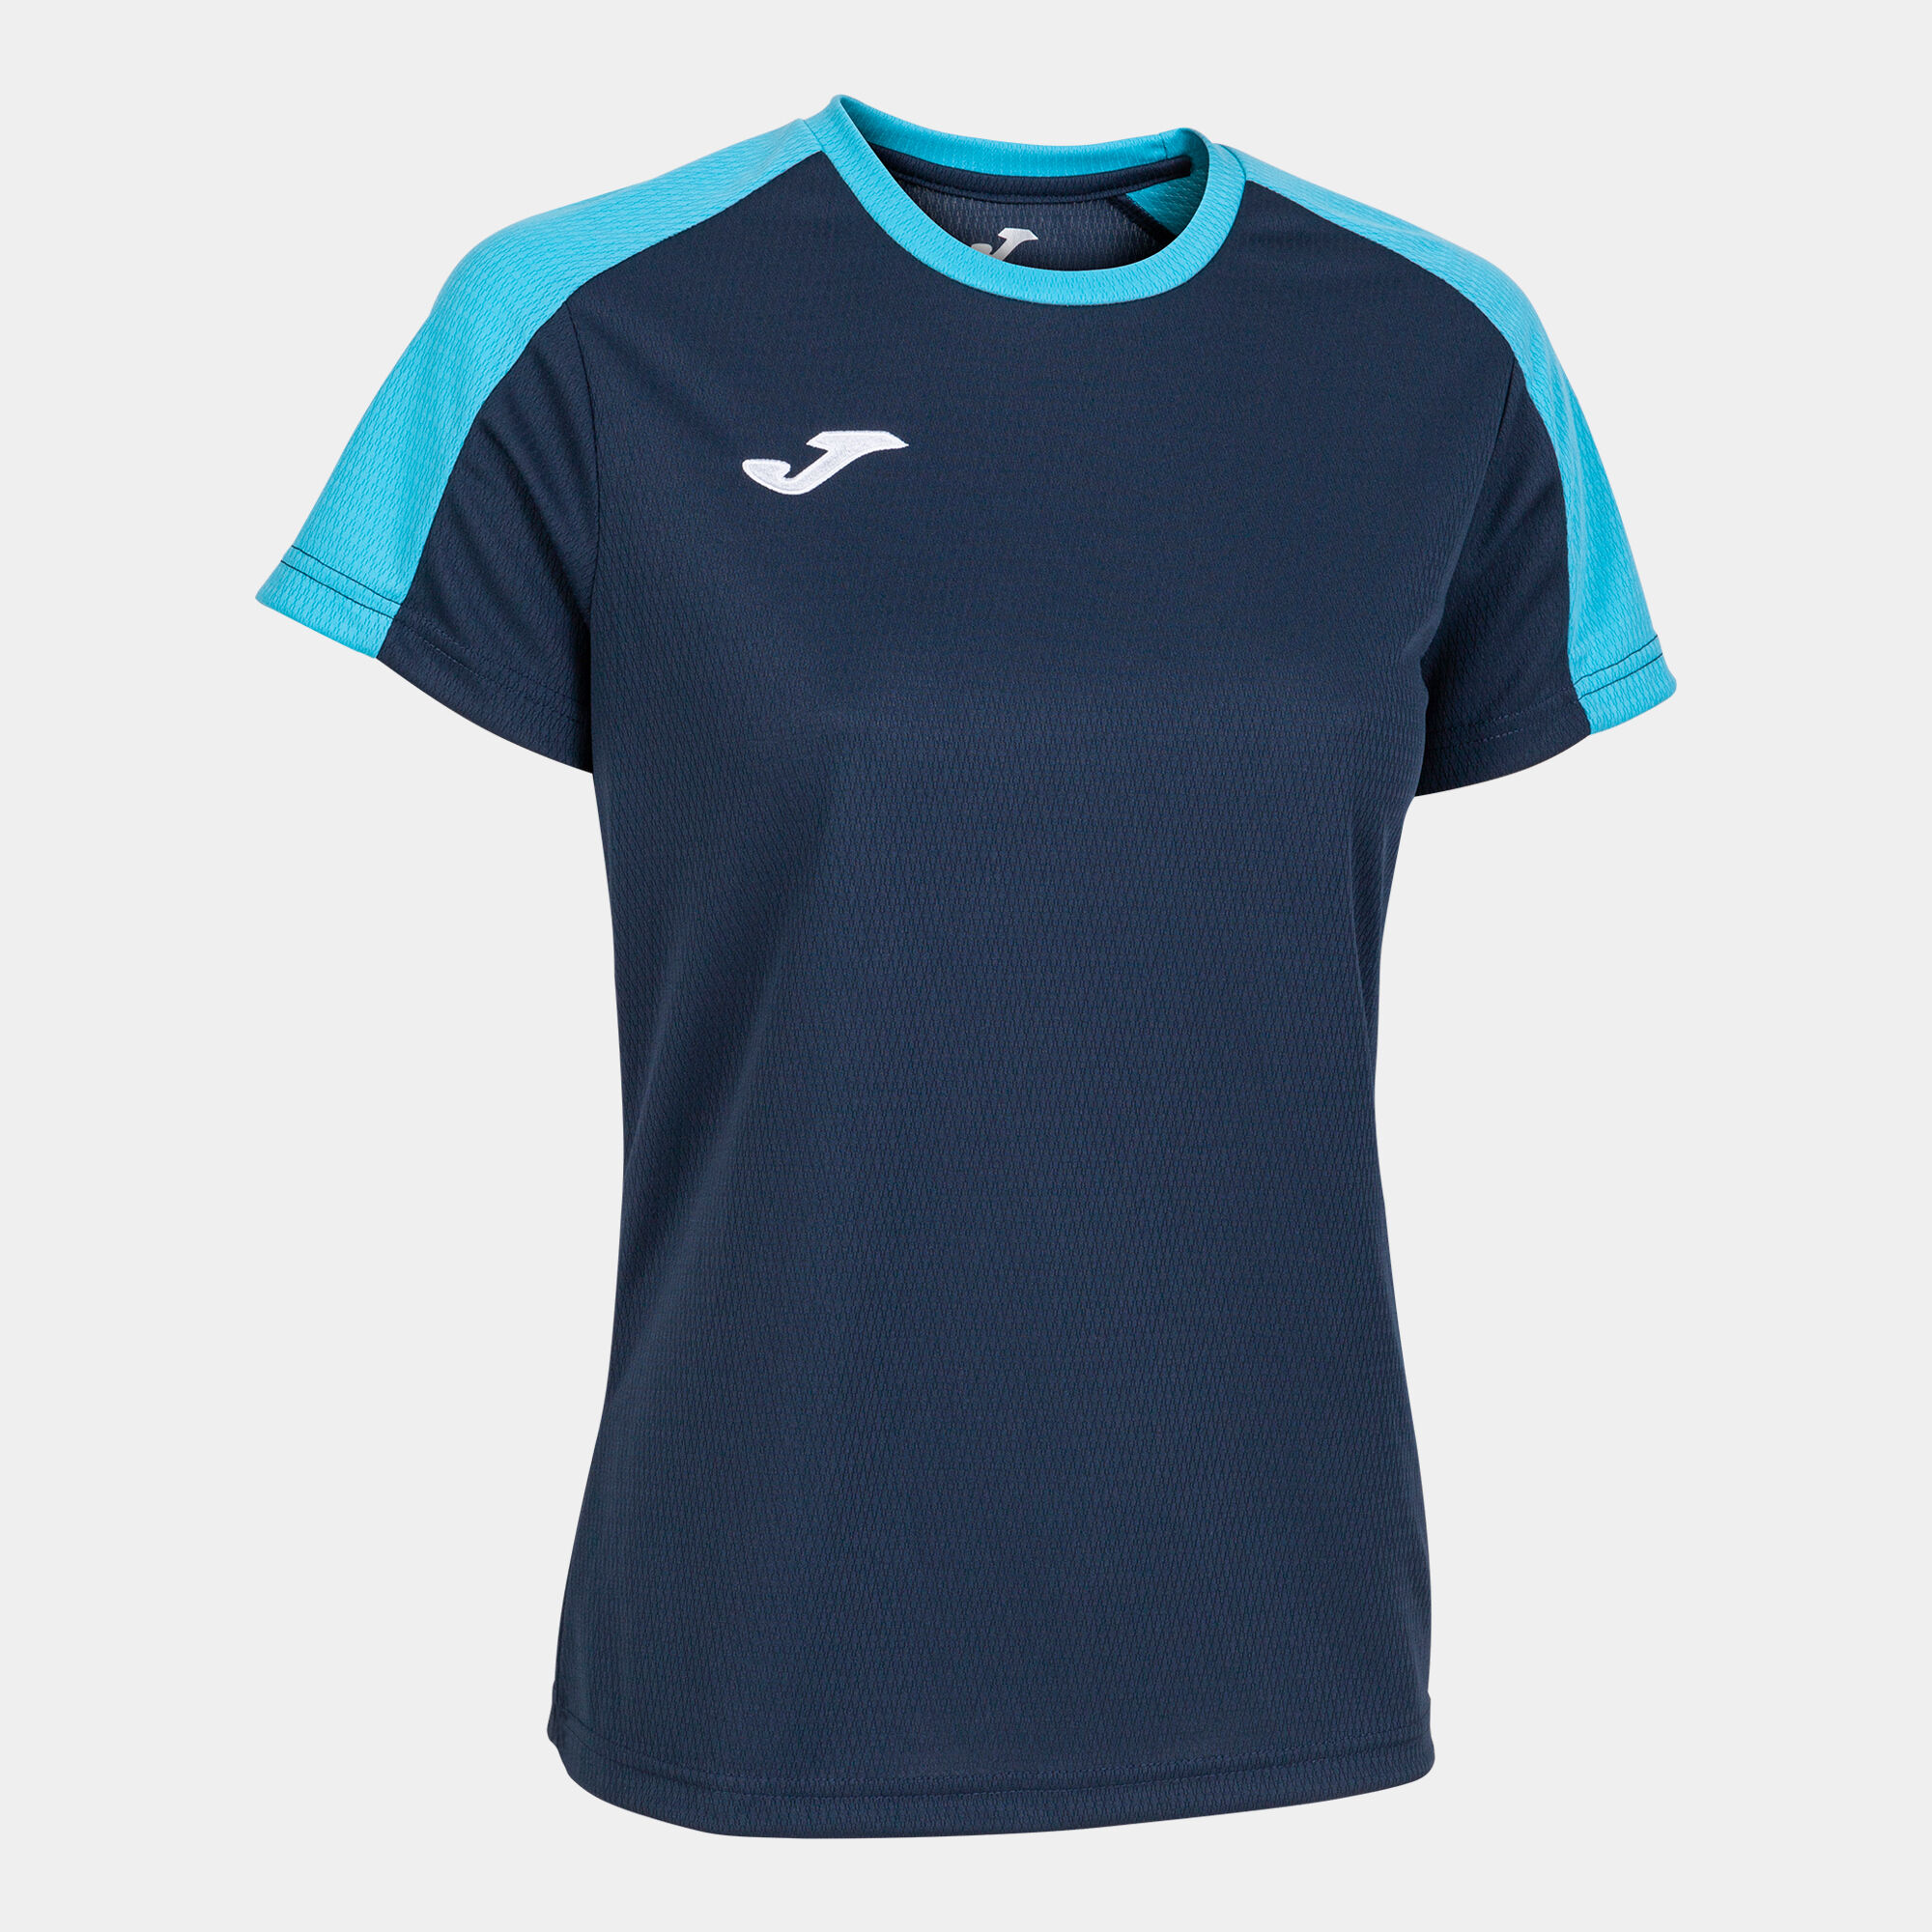 Shirt short sleeve woman Eco Championship navy blue fluorescent turquoise